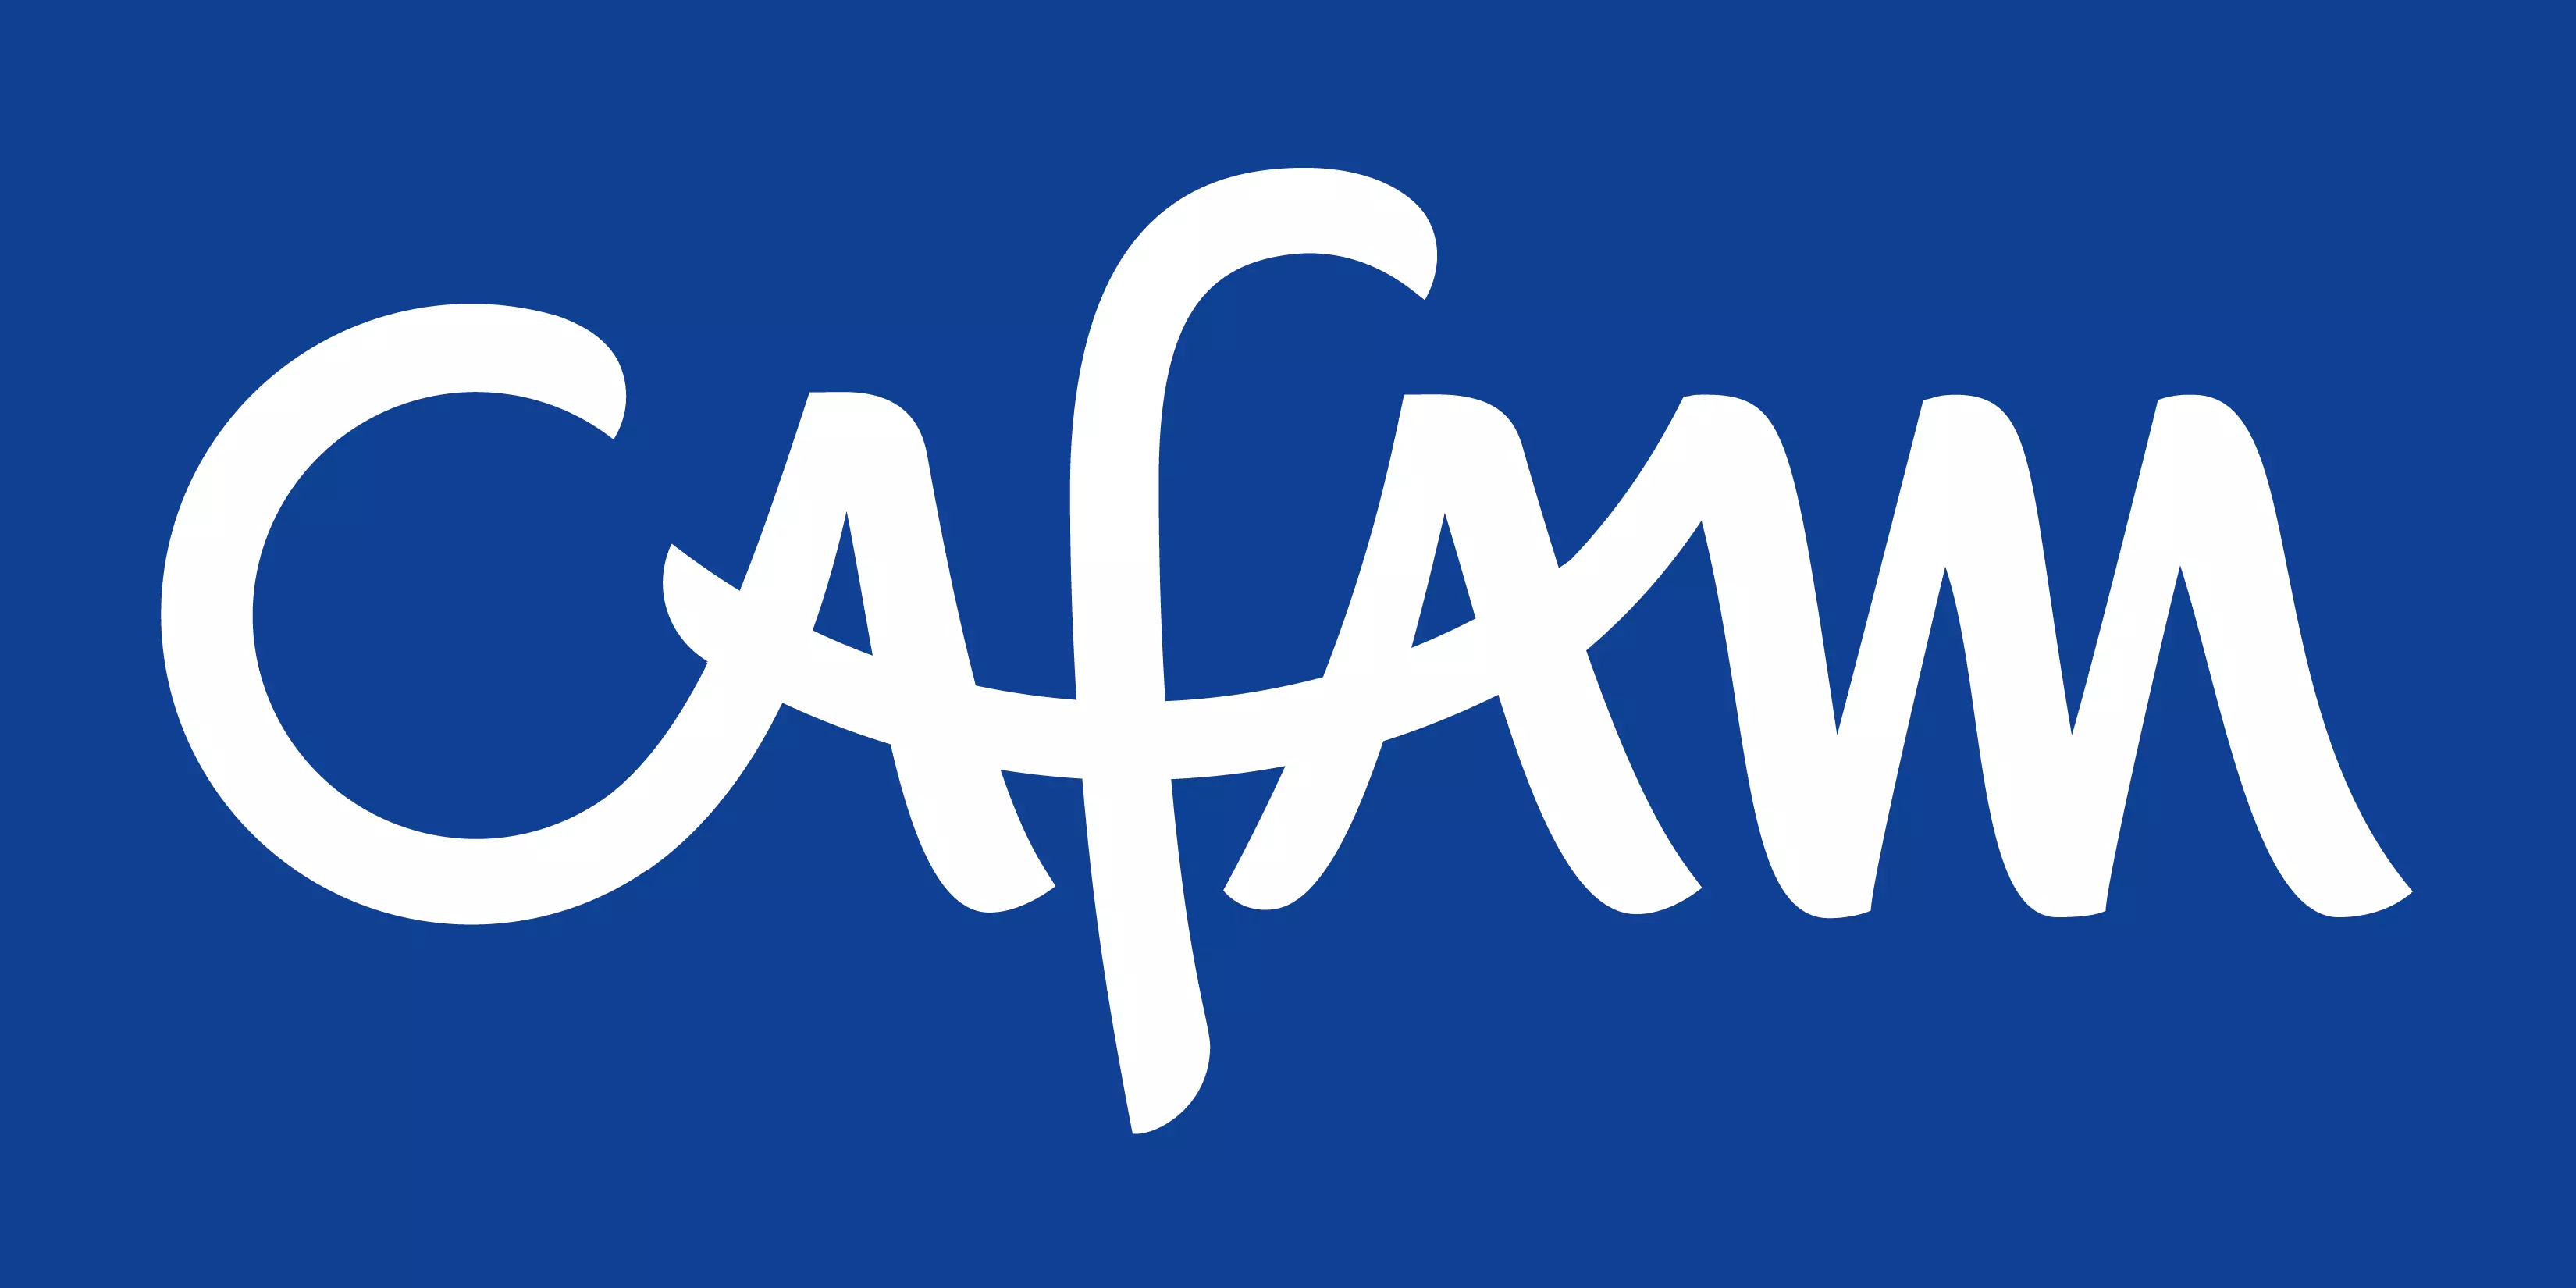 CAFAM logo Colombia